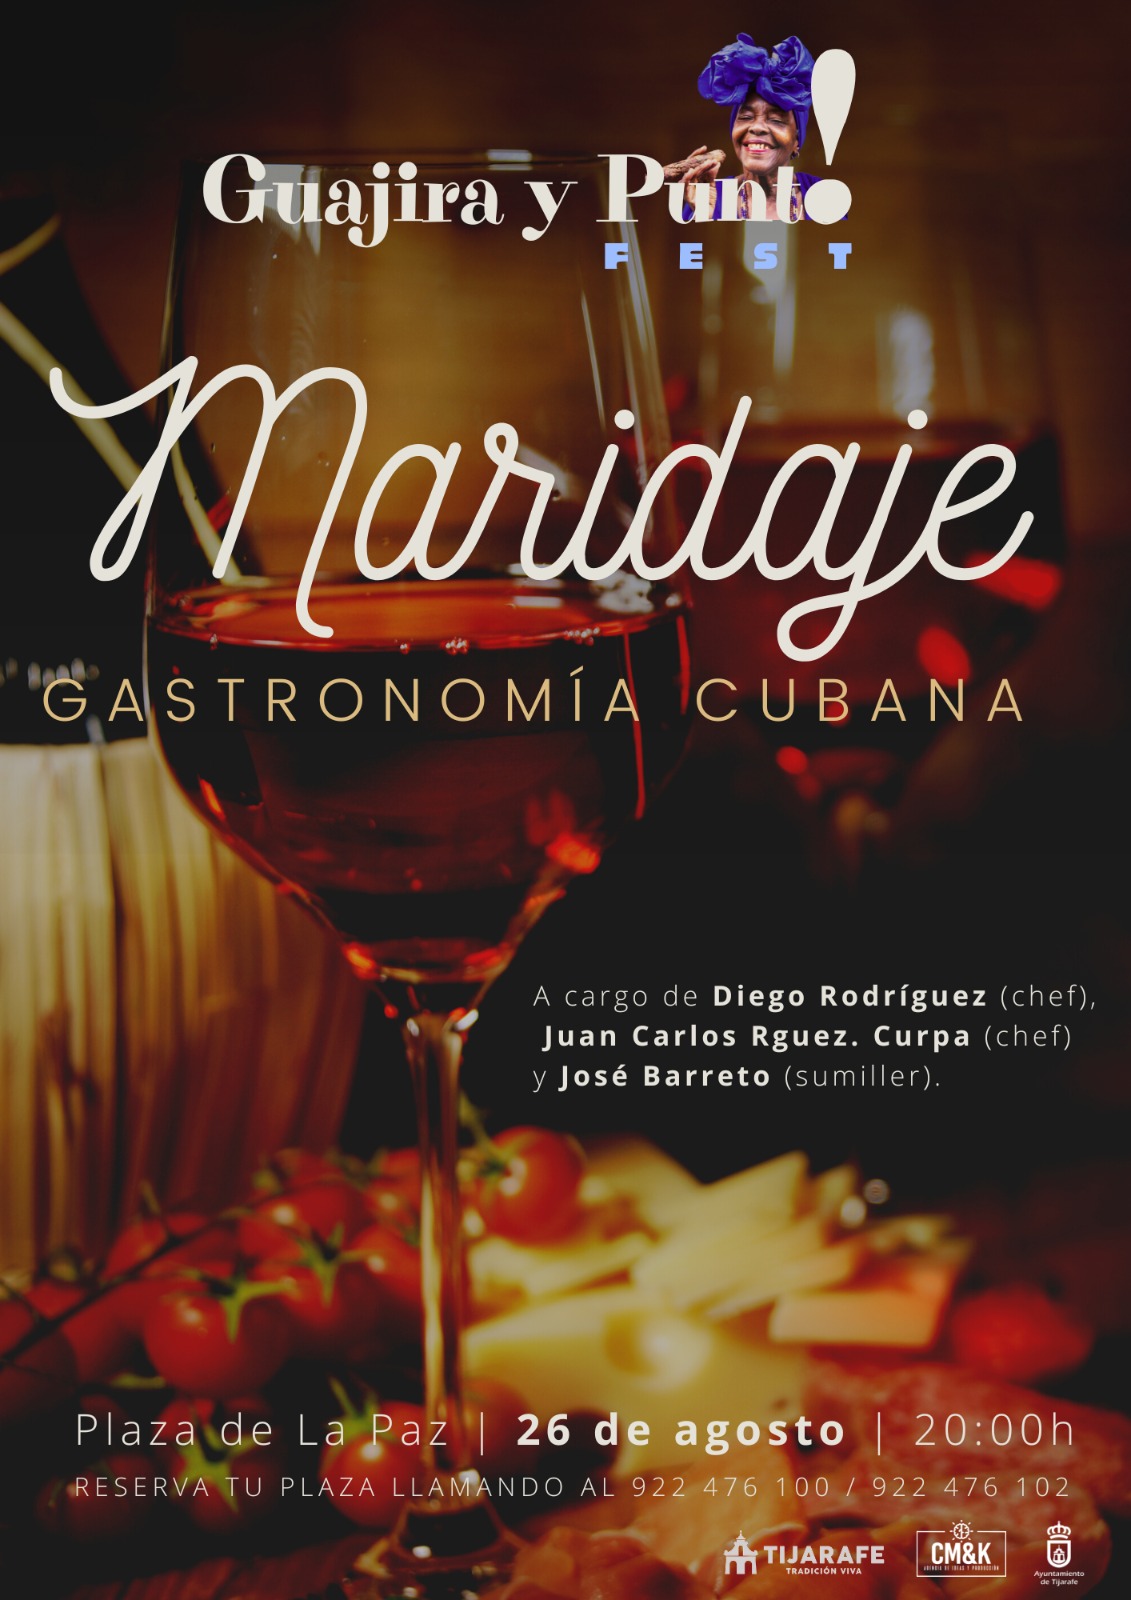 Guajira y Punto! Fest: [PLAZAS AGOTADAS] Maridaje gastronomía cubana